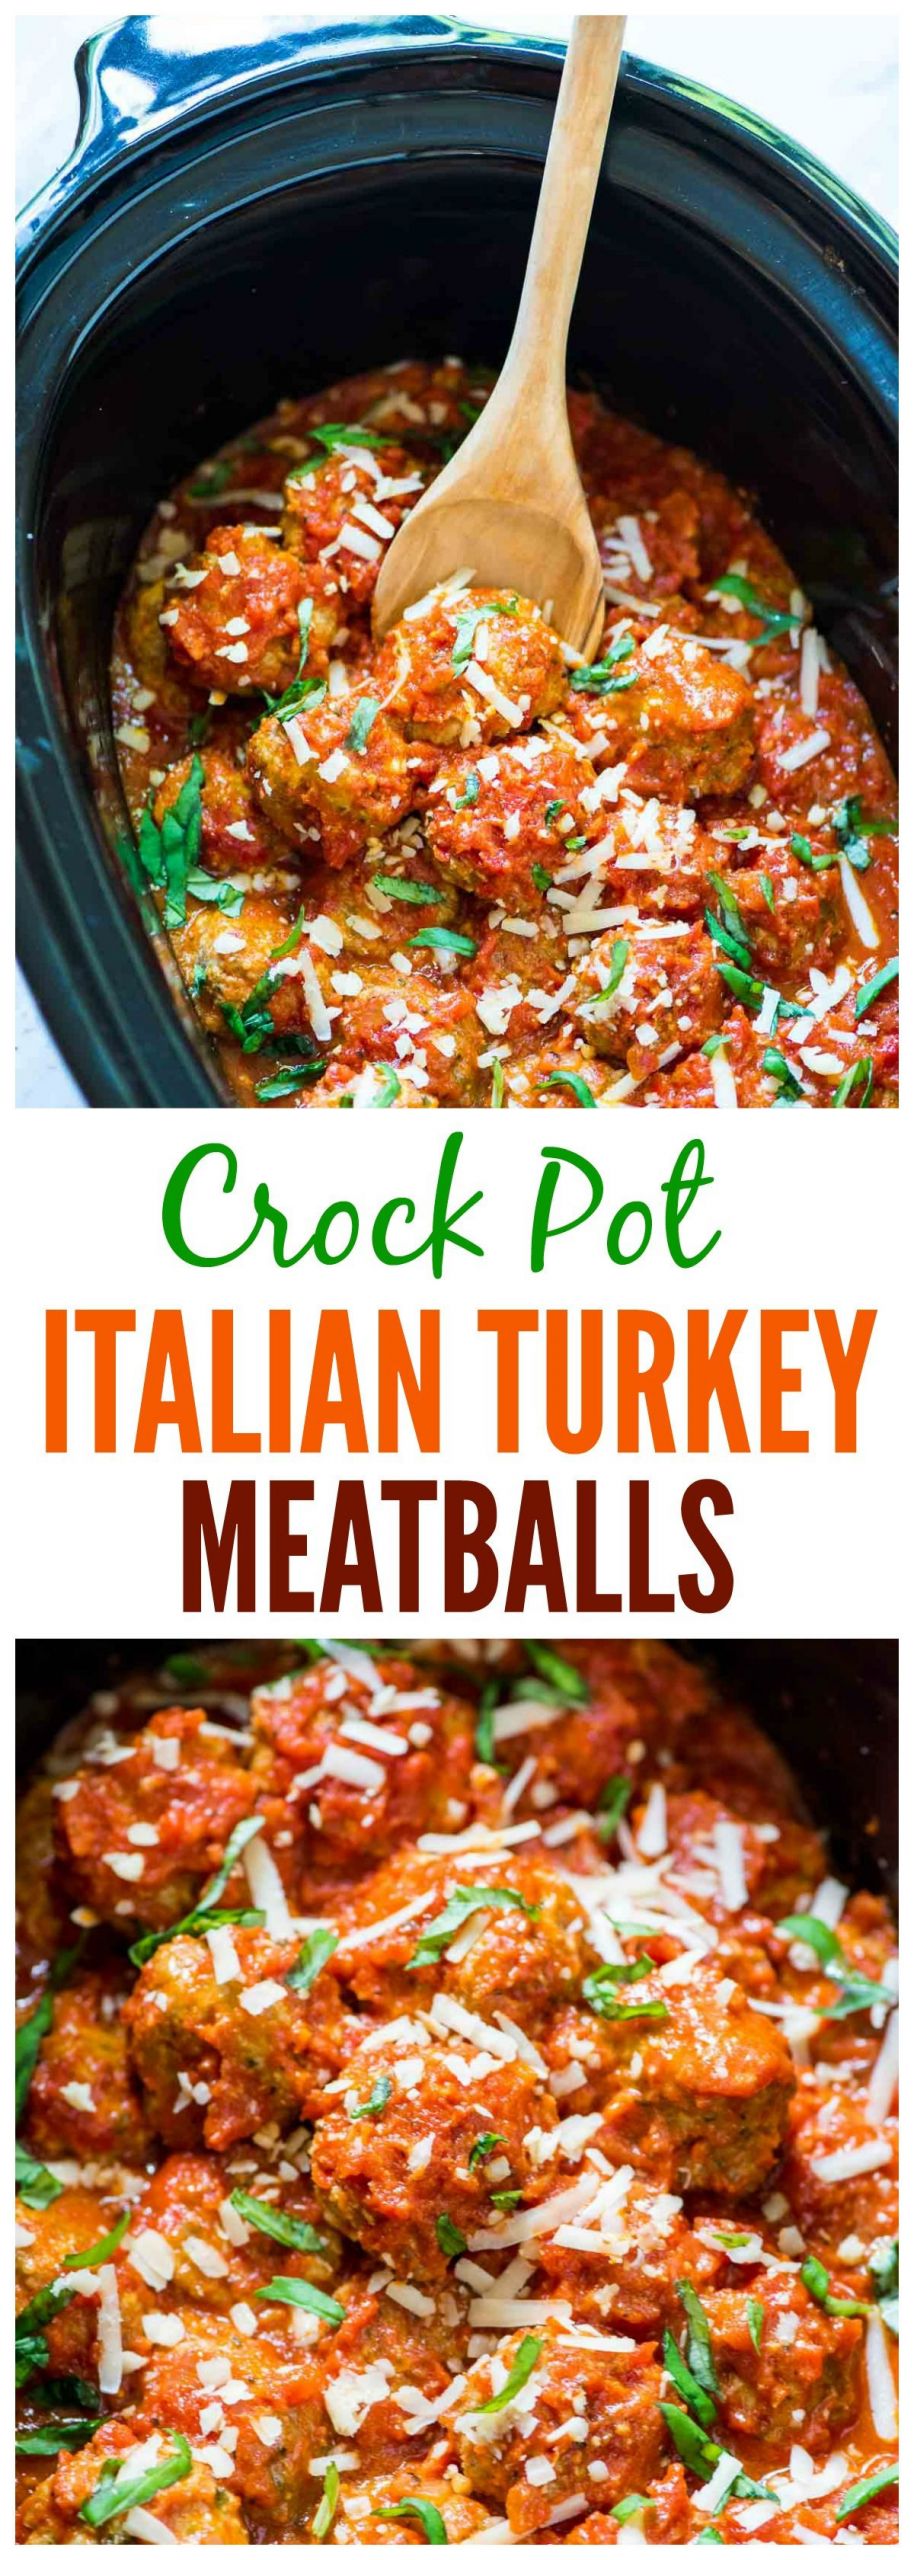 Healthy Ground Turkey Crock Pot Recipes
 Classic Crock Pot Turkey Meatballs DELICIOUS Our whole